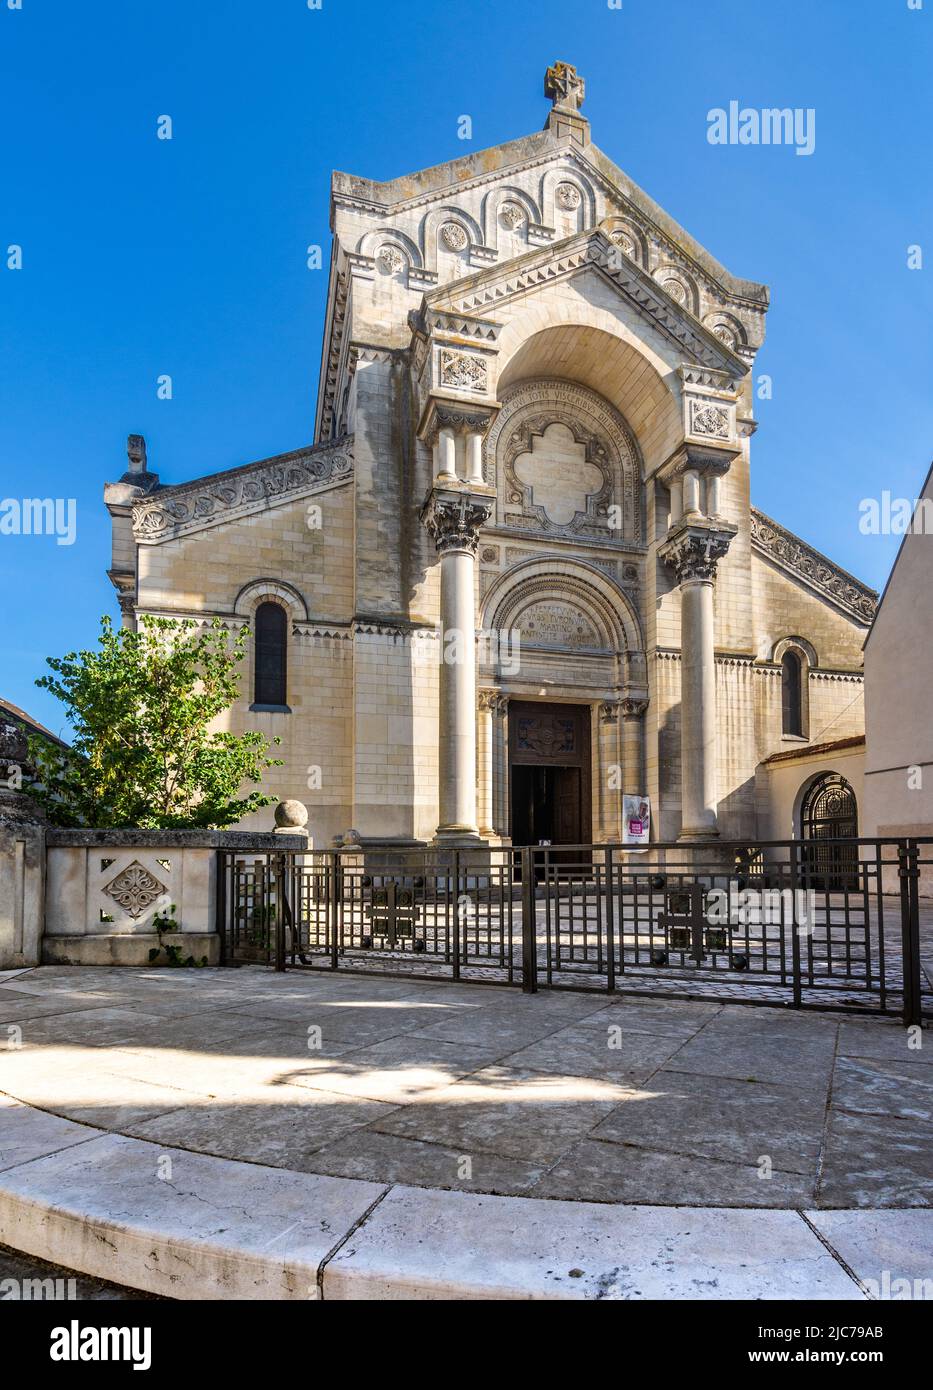 Basílica neo-bizantina de Saint-Martin de Tours, rue Descartes, Tours, Francia. Foto de stock